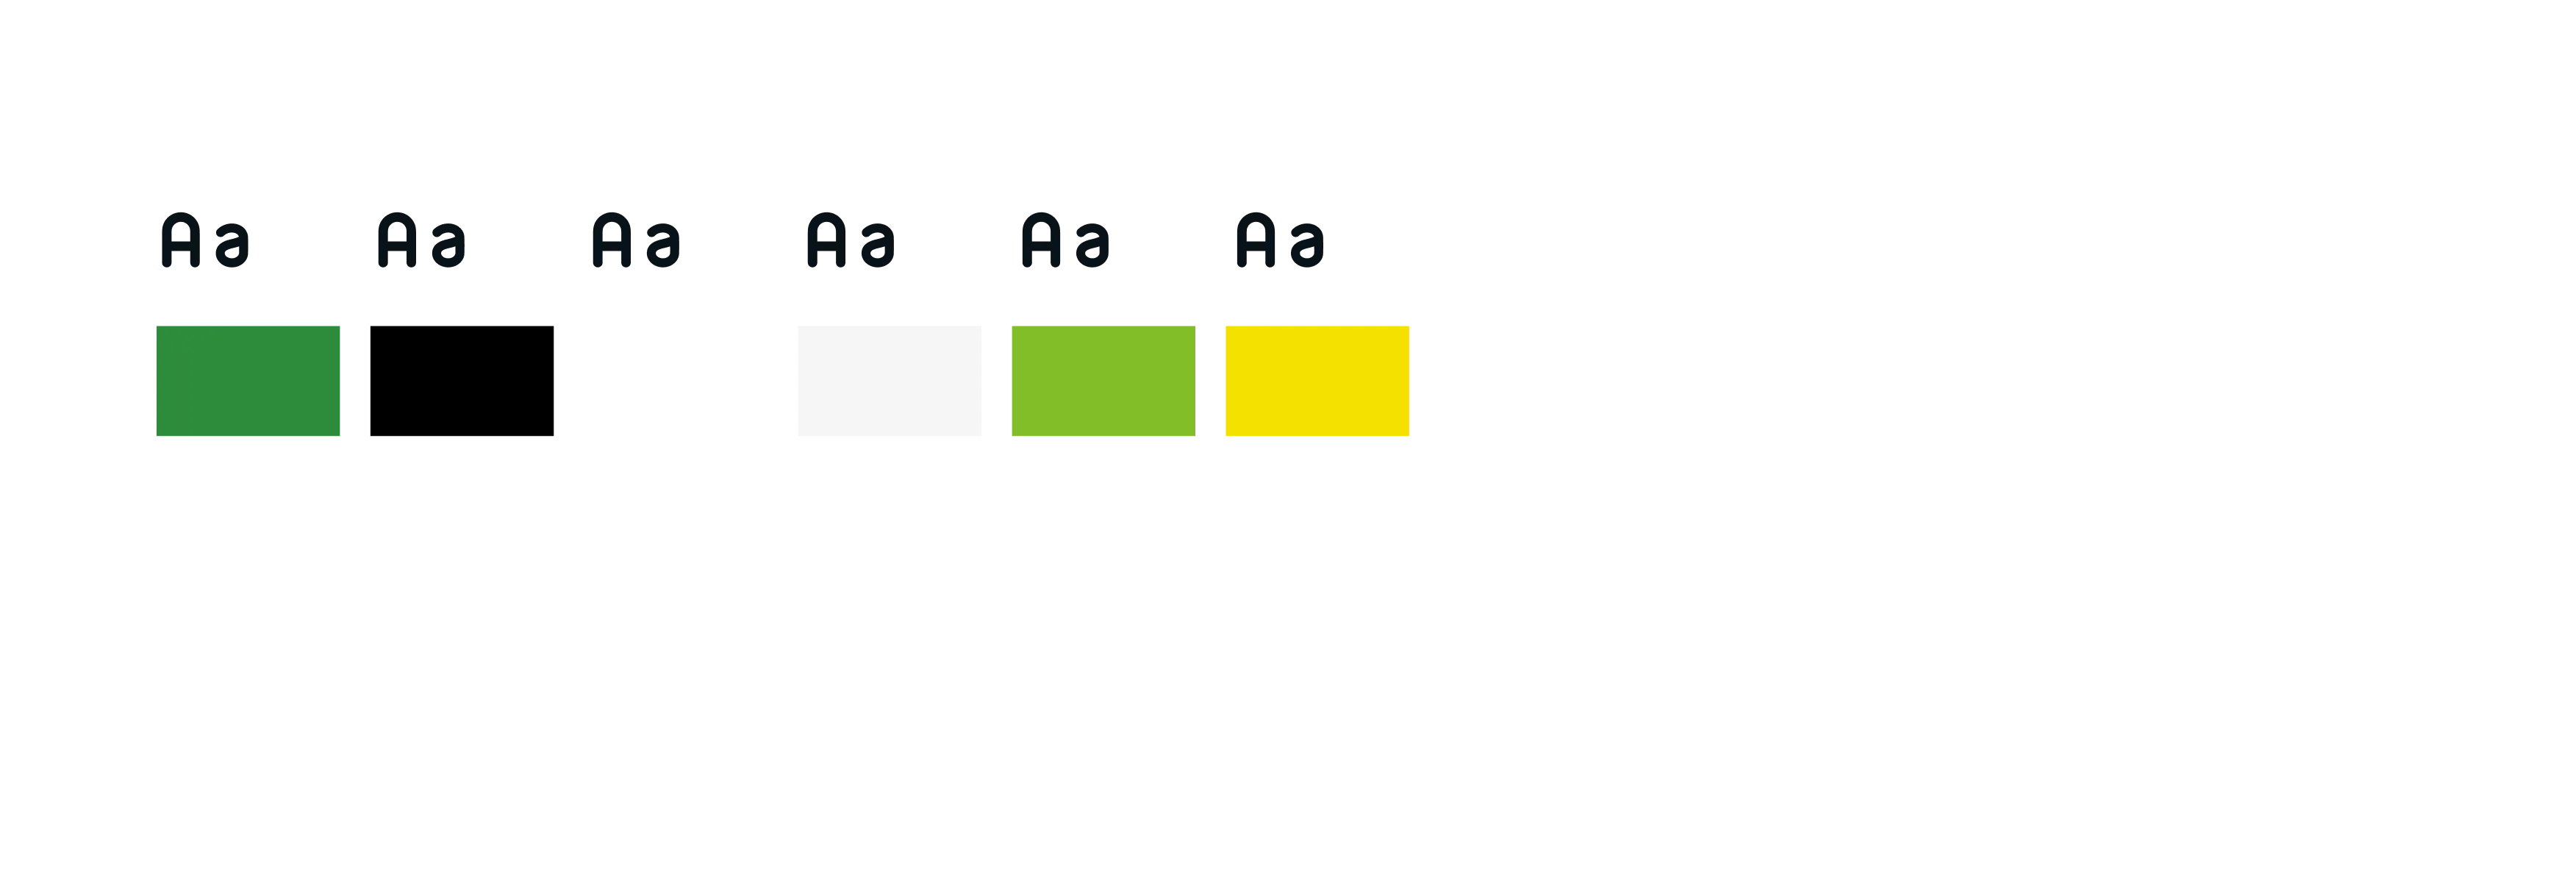 Amebaのブランドカラー6種類。背景には2本の縄が描かれている。